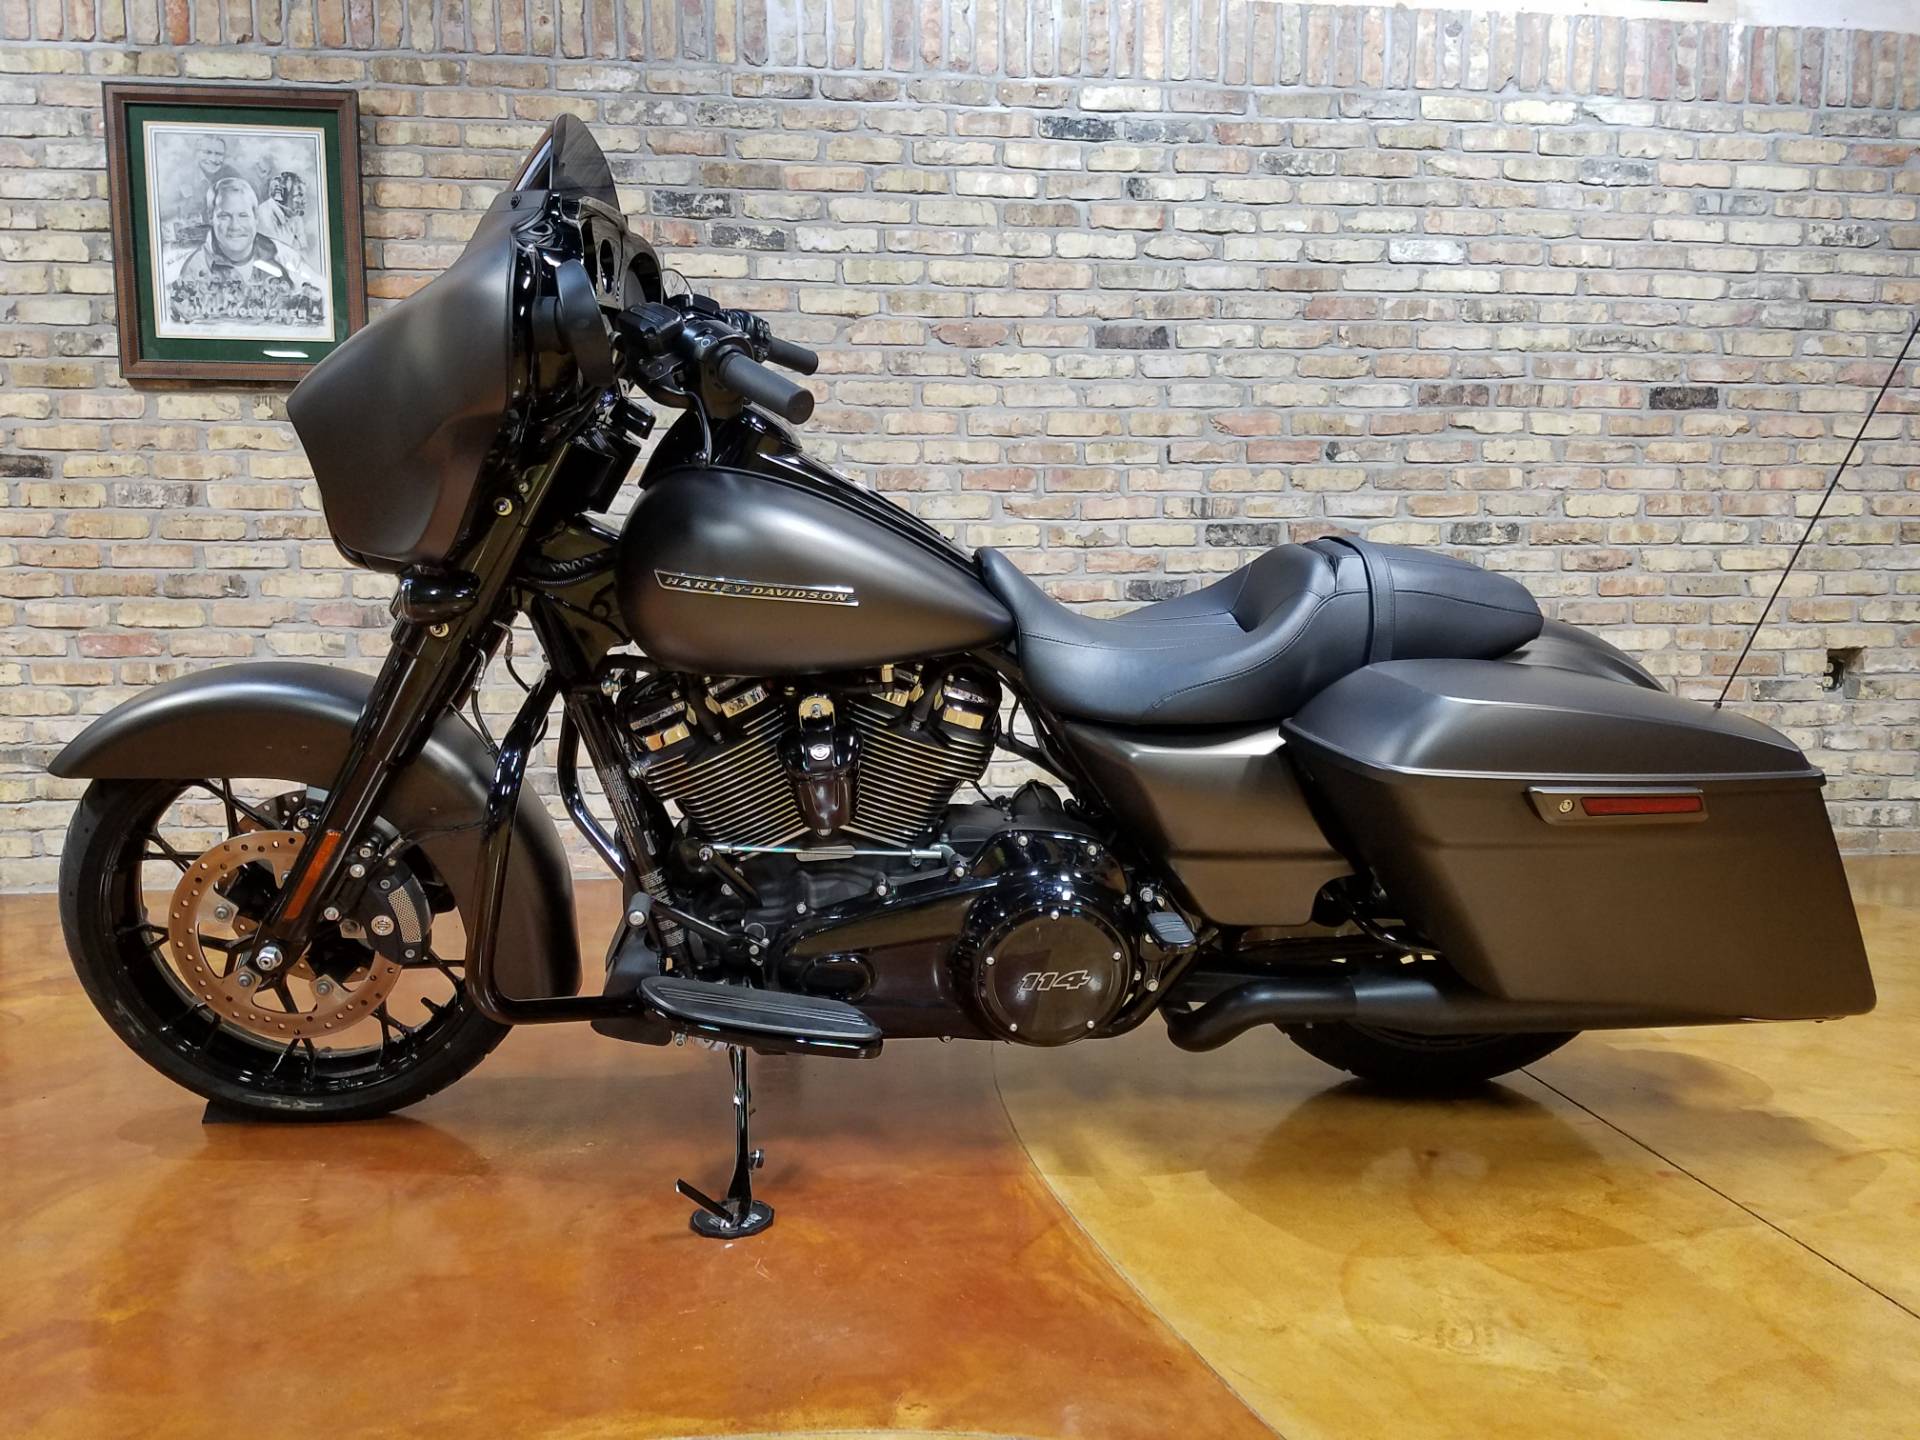 Used 2020 Harley Davidson Street Glide Special Motorcycles In Big Bend Wi 4361 River Rock Gray Denim